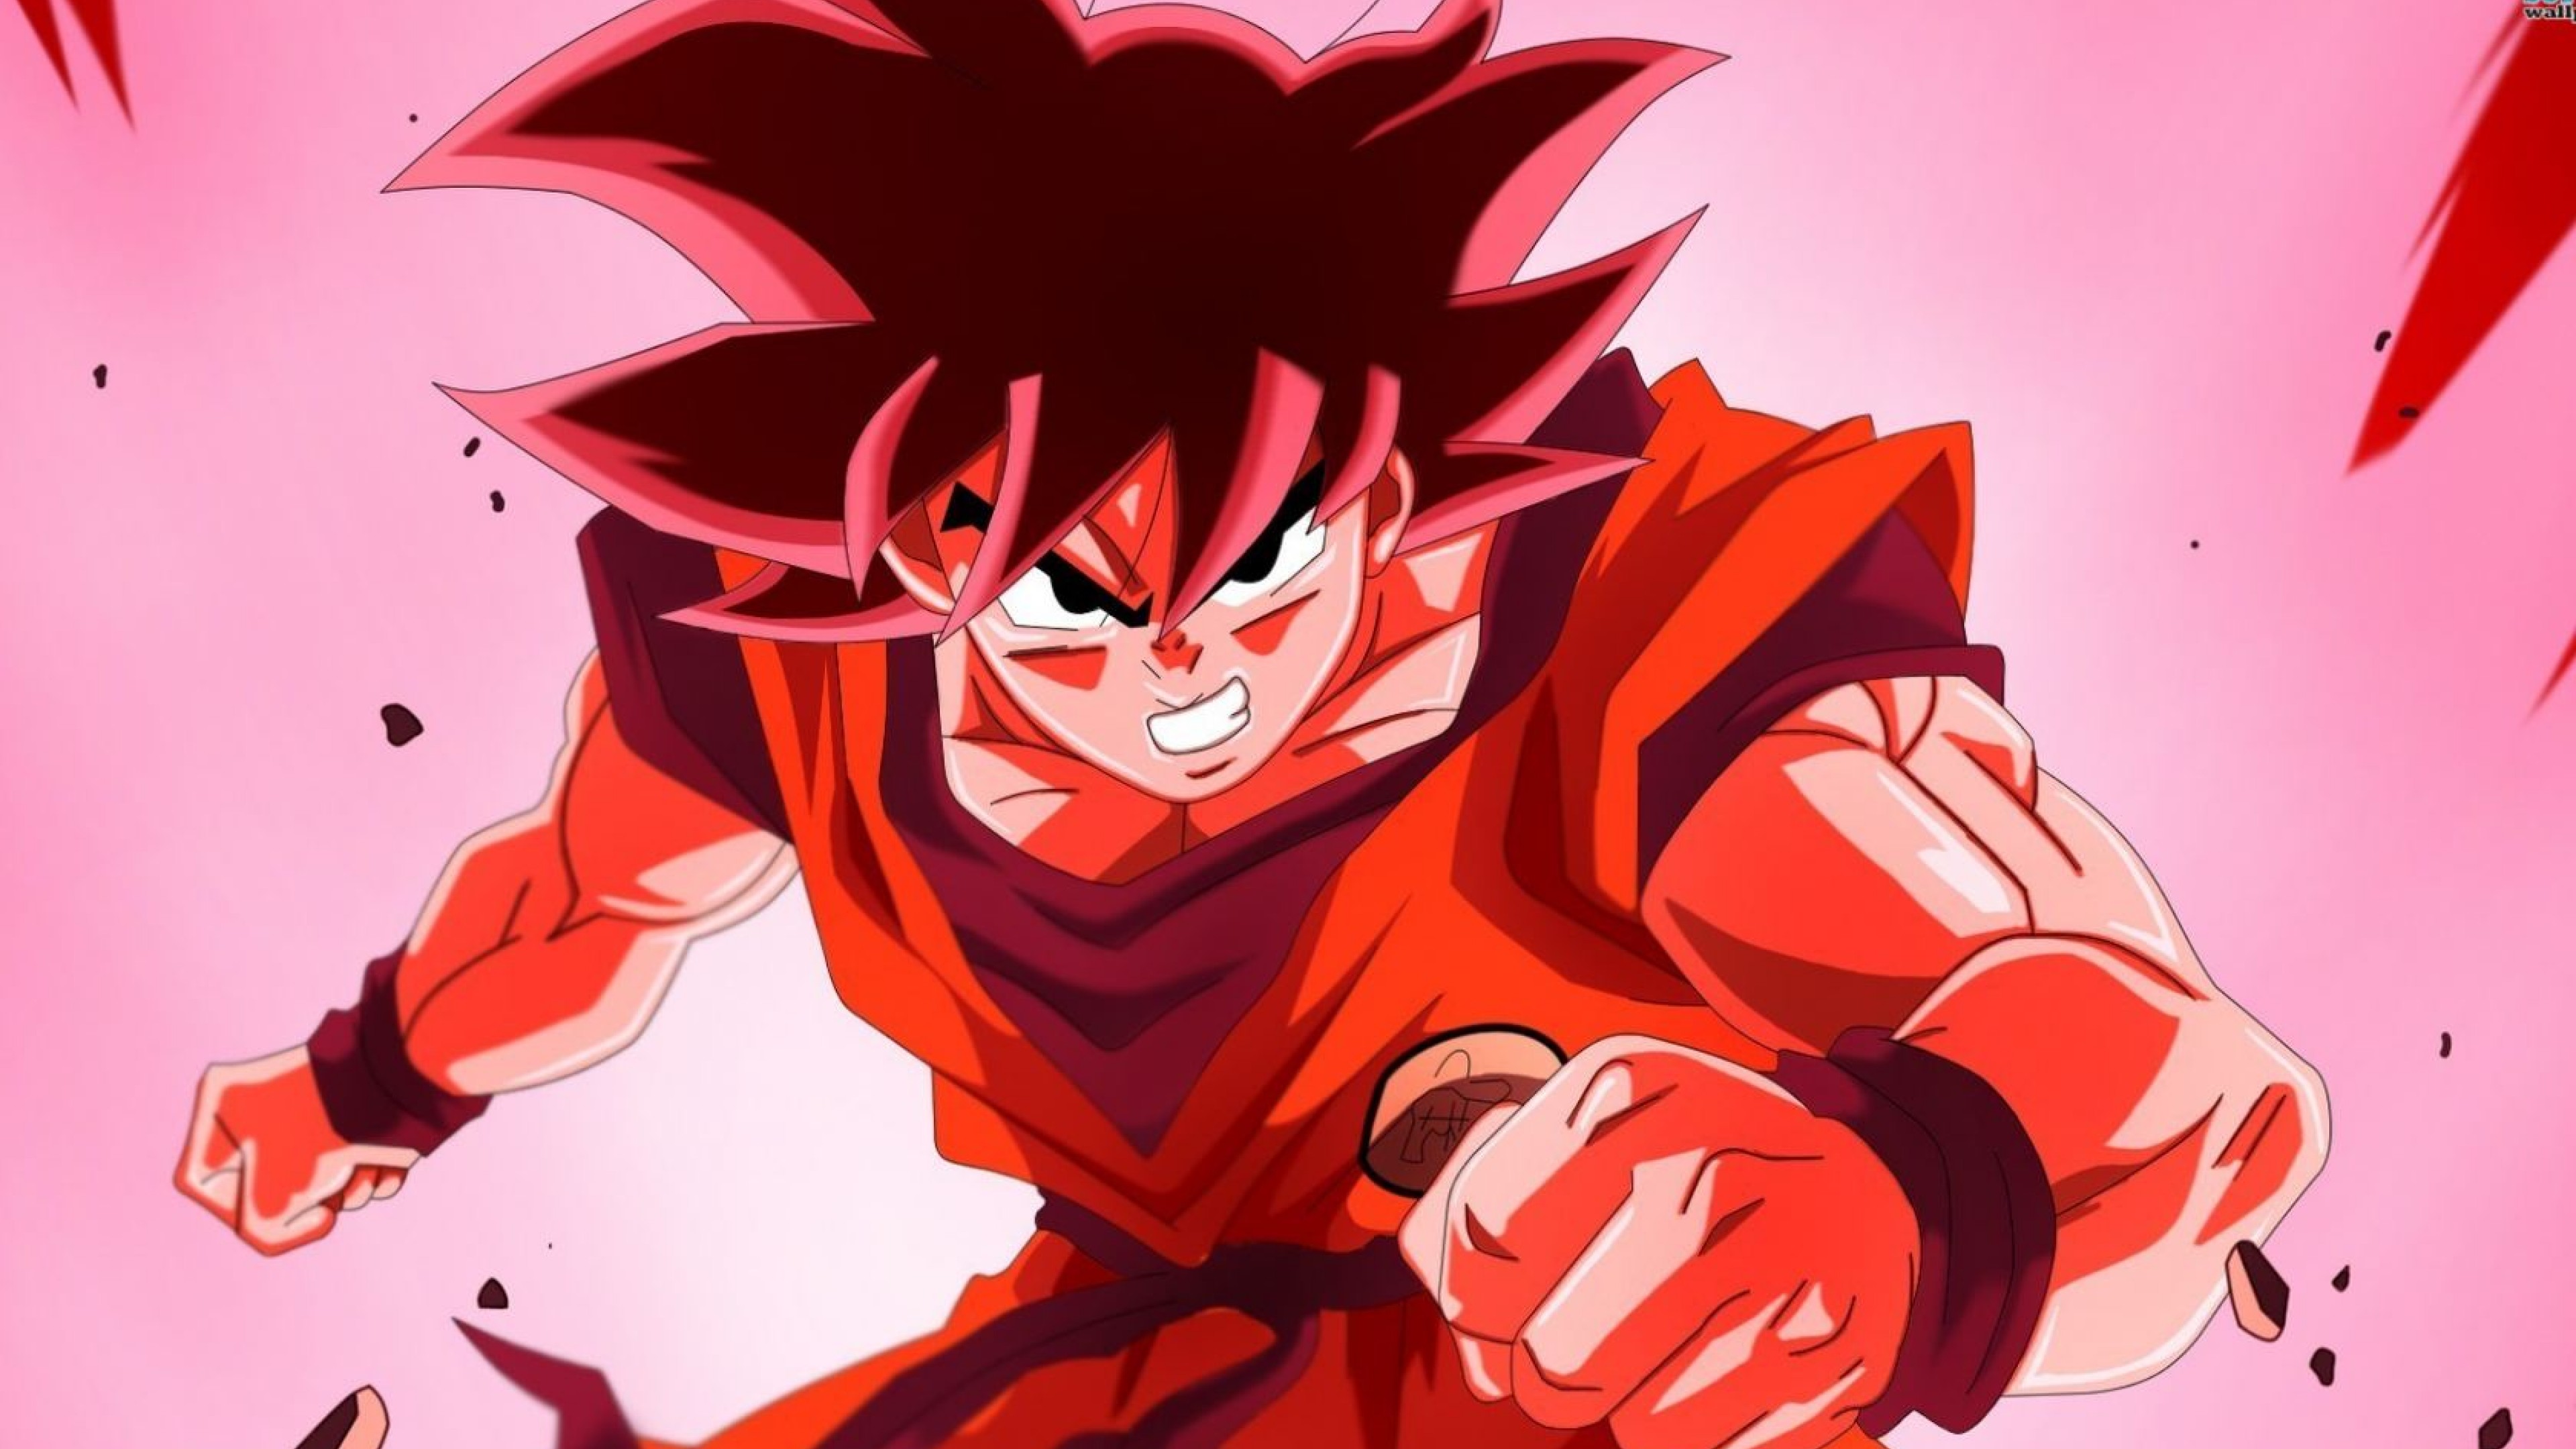 Goku red dragonball z wallpaper for desktop and mobiles k ultra hd